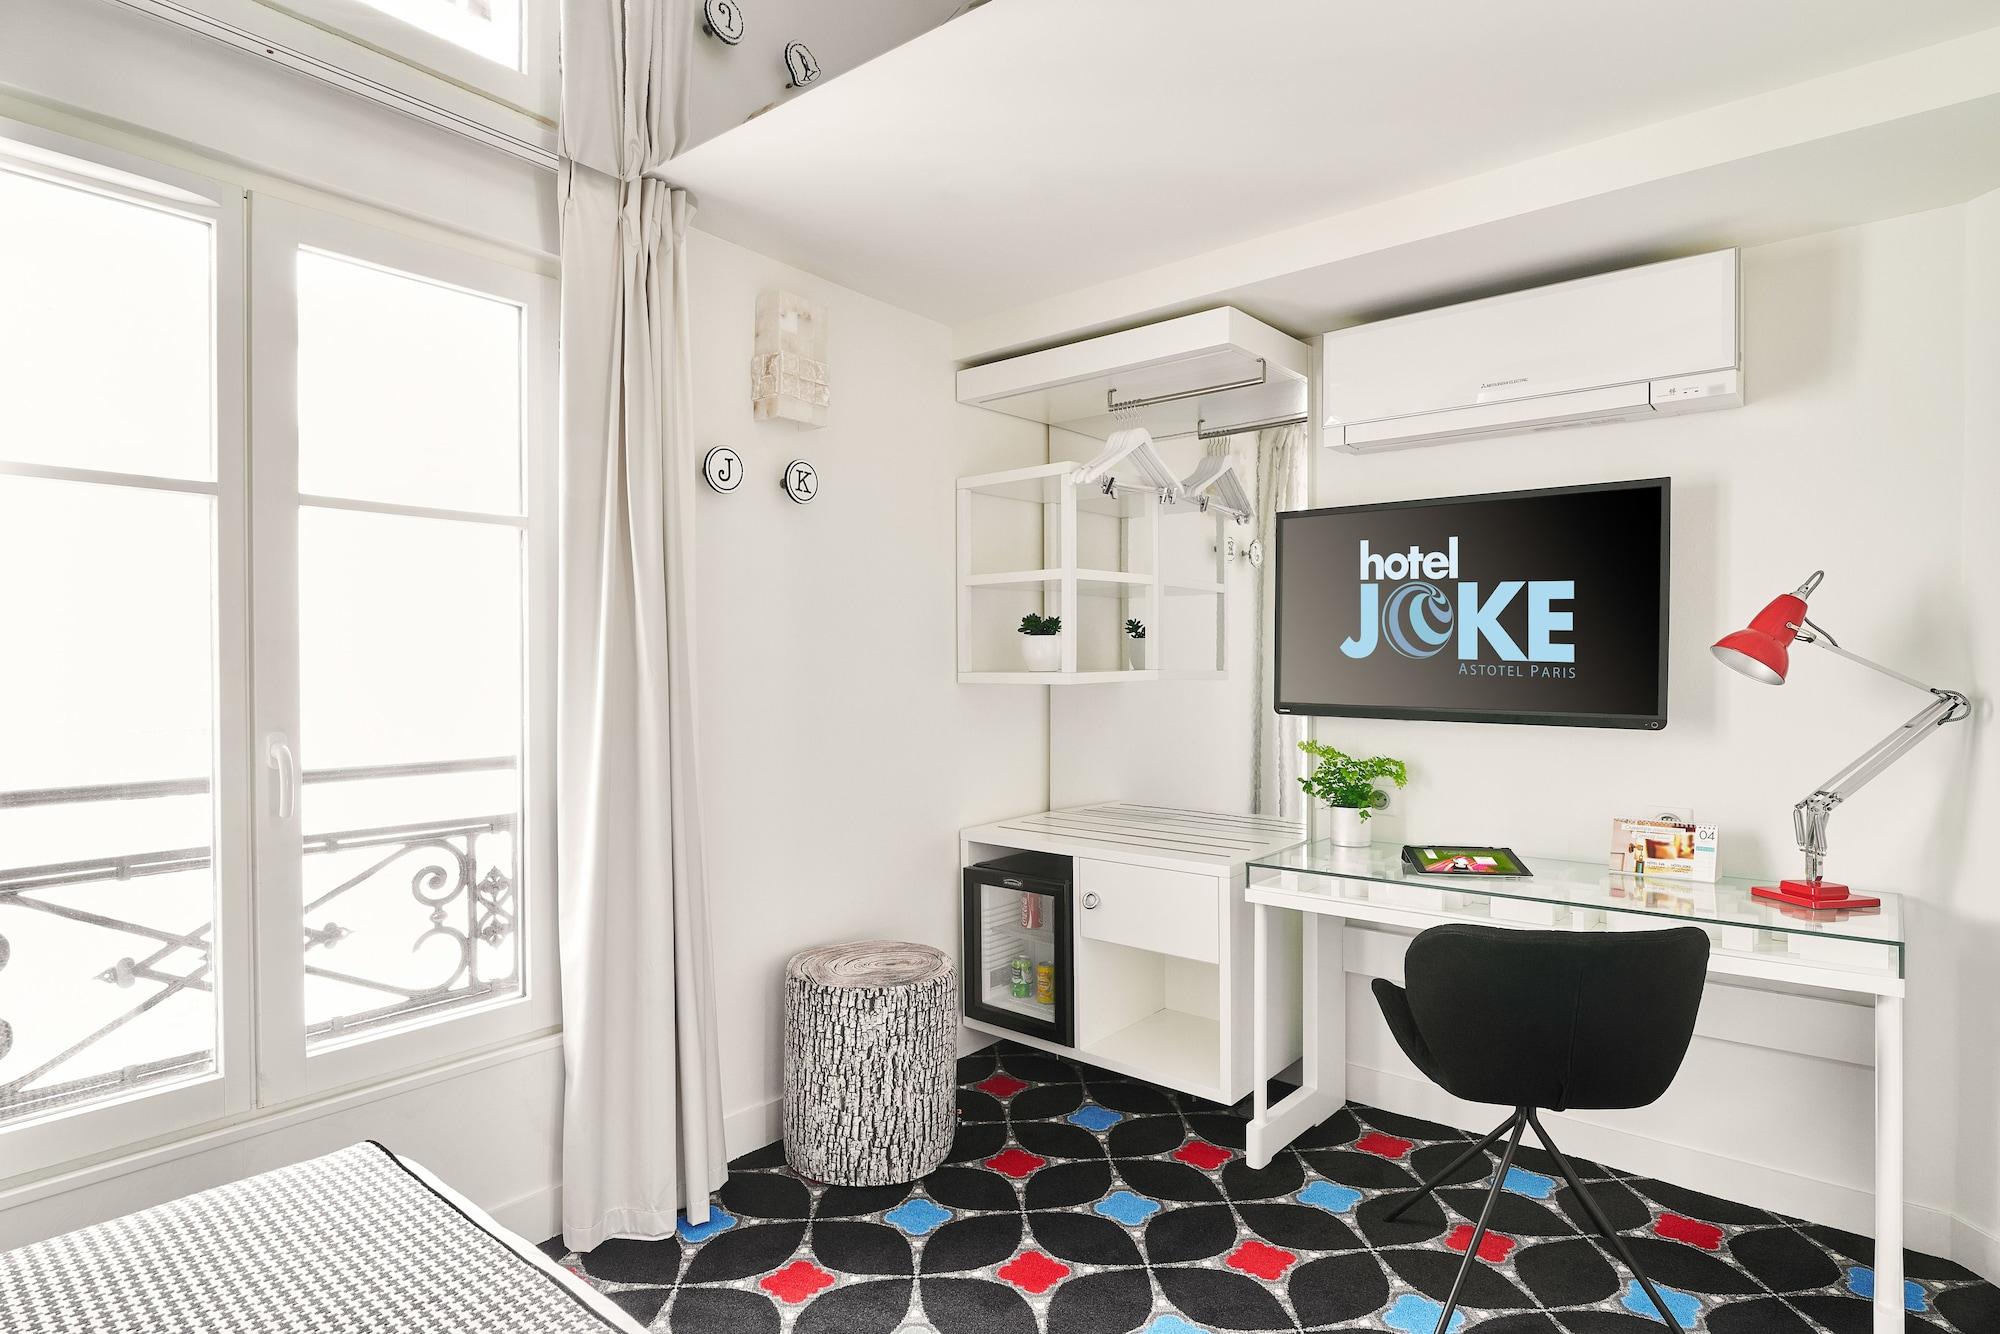 Hotel Joke - Astotel Paris Exterior photo